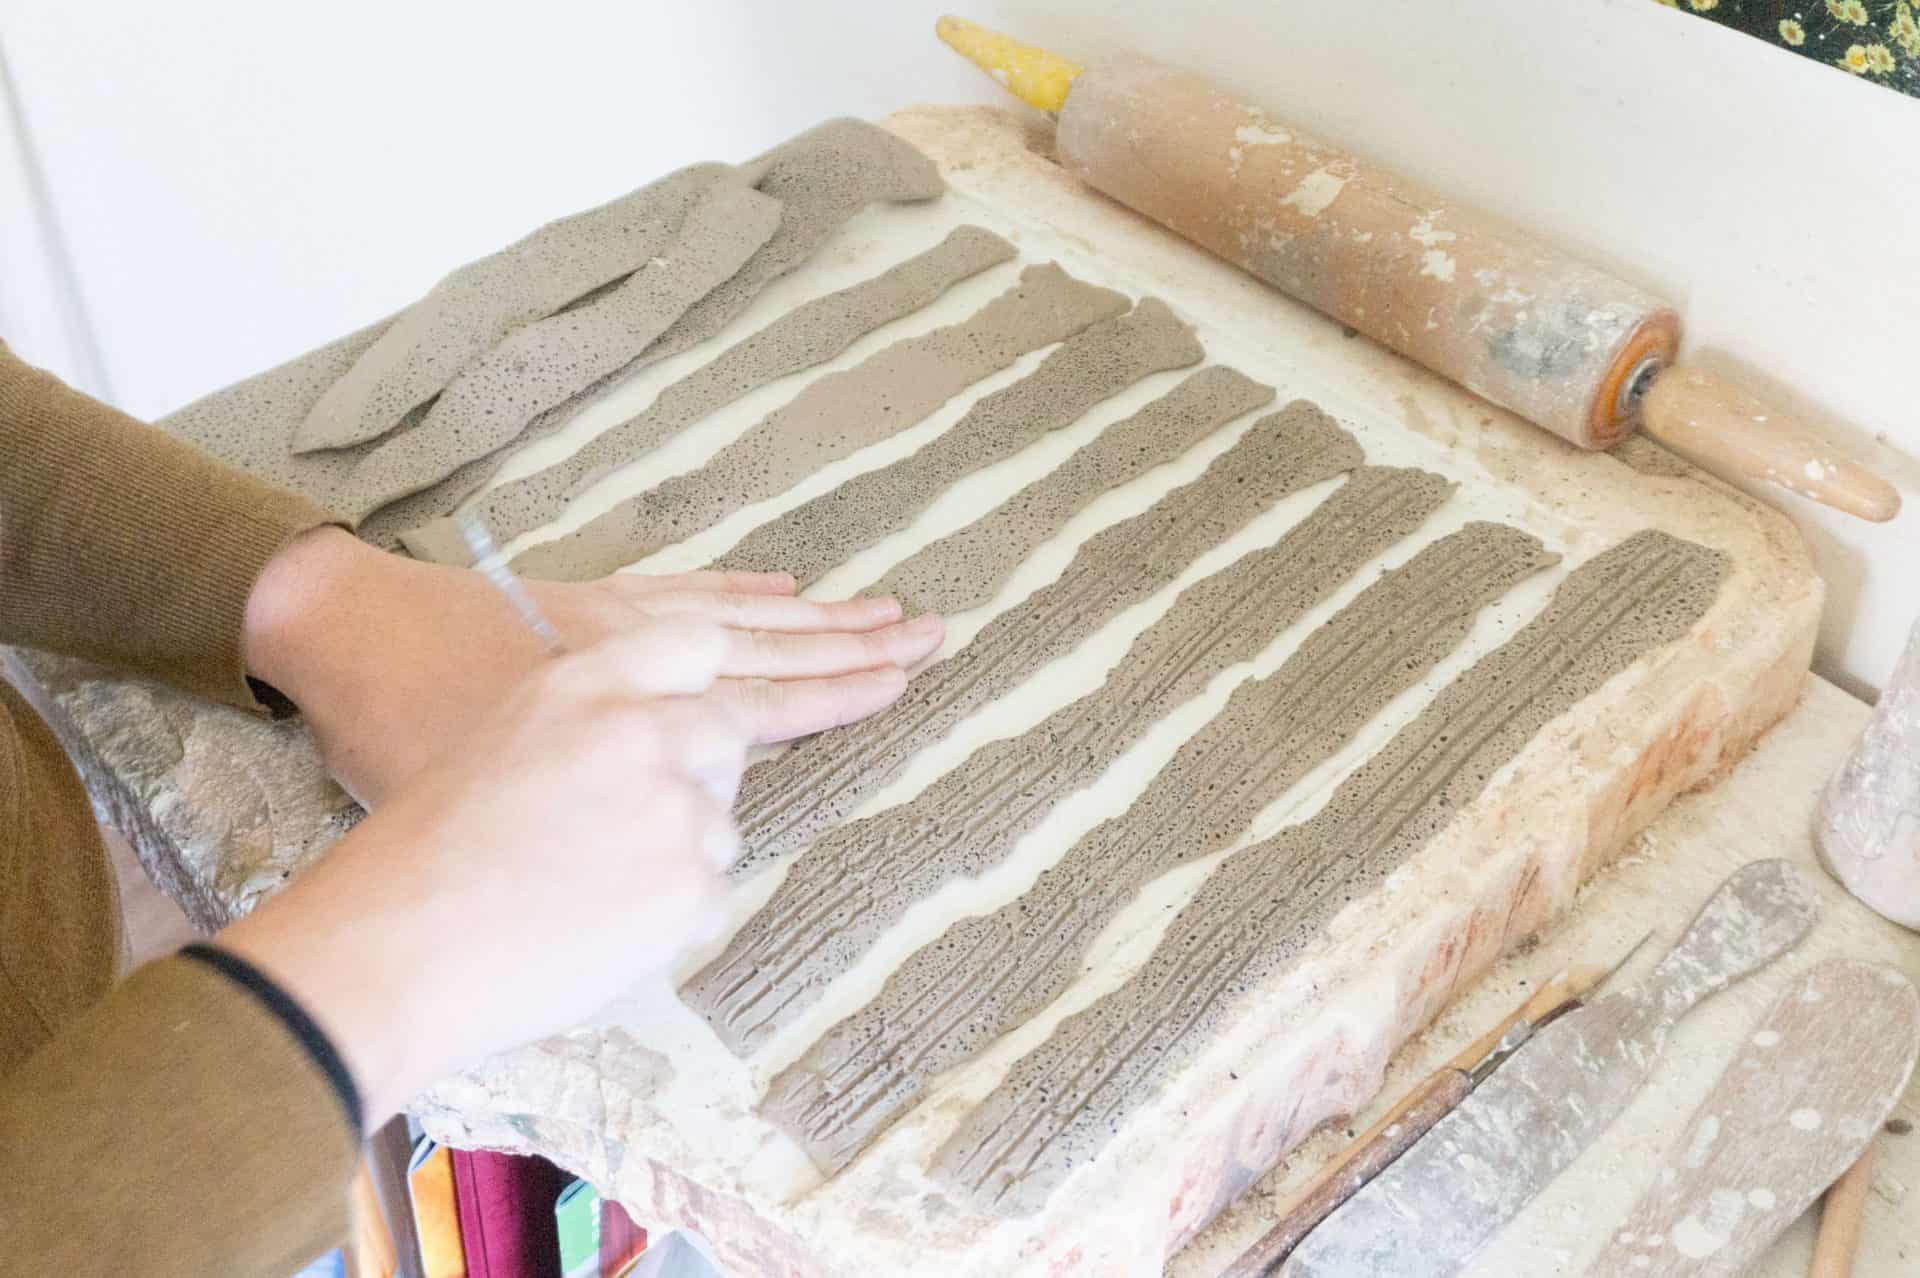 Ceramics artist Karlene Jean Kantner rolls and carves a slab of clay. Press photo courtesy of the artist